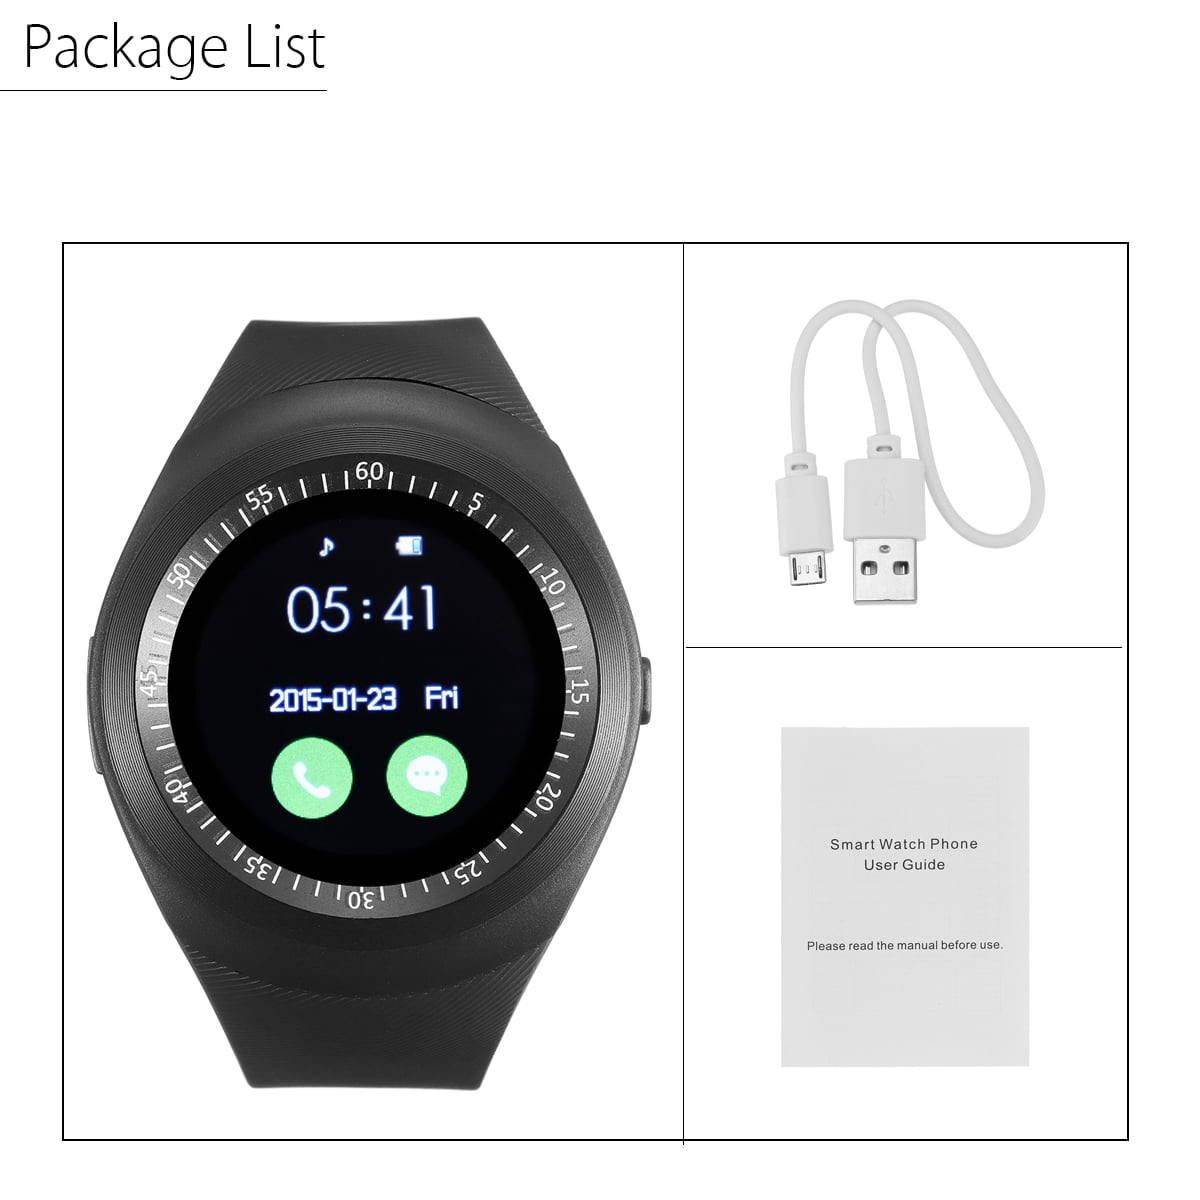 Как настроить смарт часы x9. Часы Smart watch Phone user Guide. Смарт часы Band user Guide. Smart watch user manualинструксия. Часы смарт вотч усерс мануал.